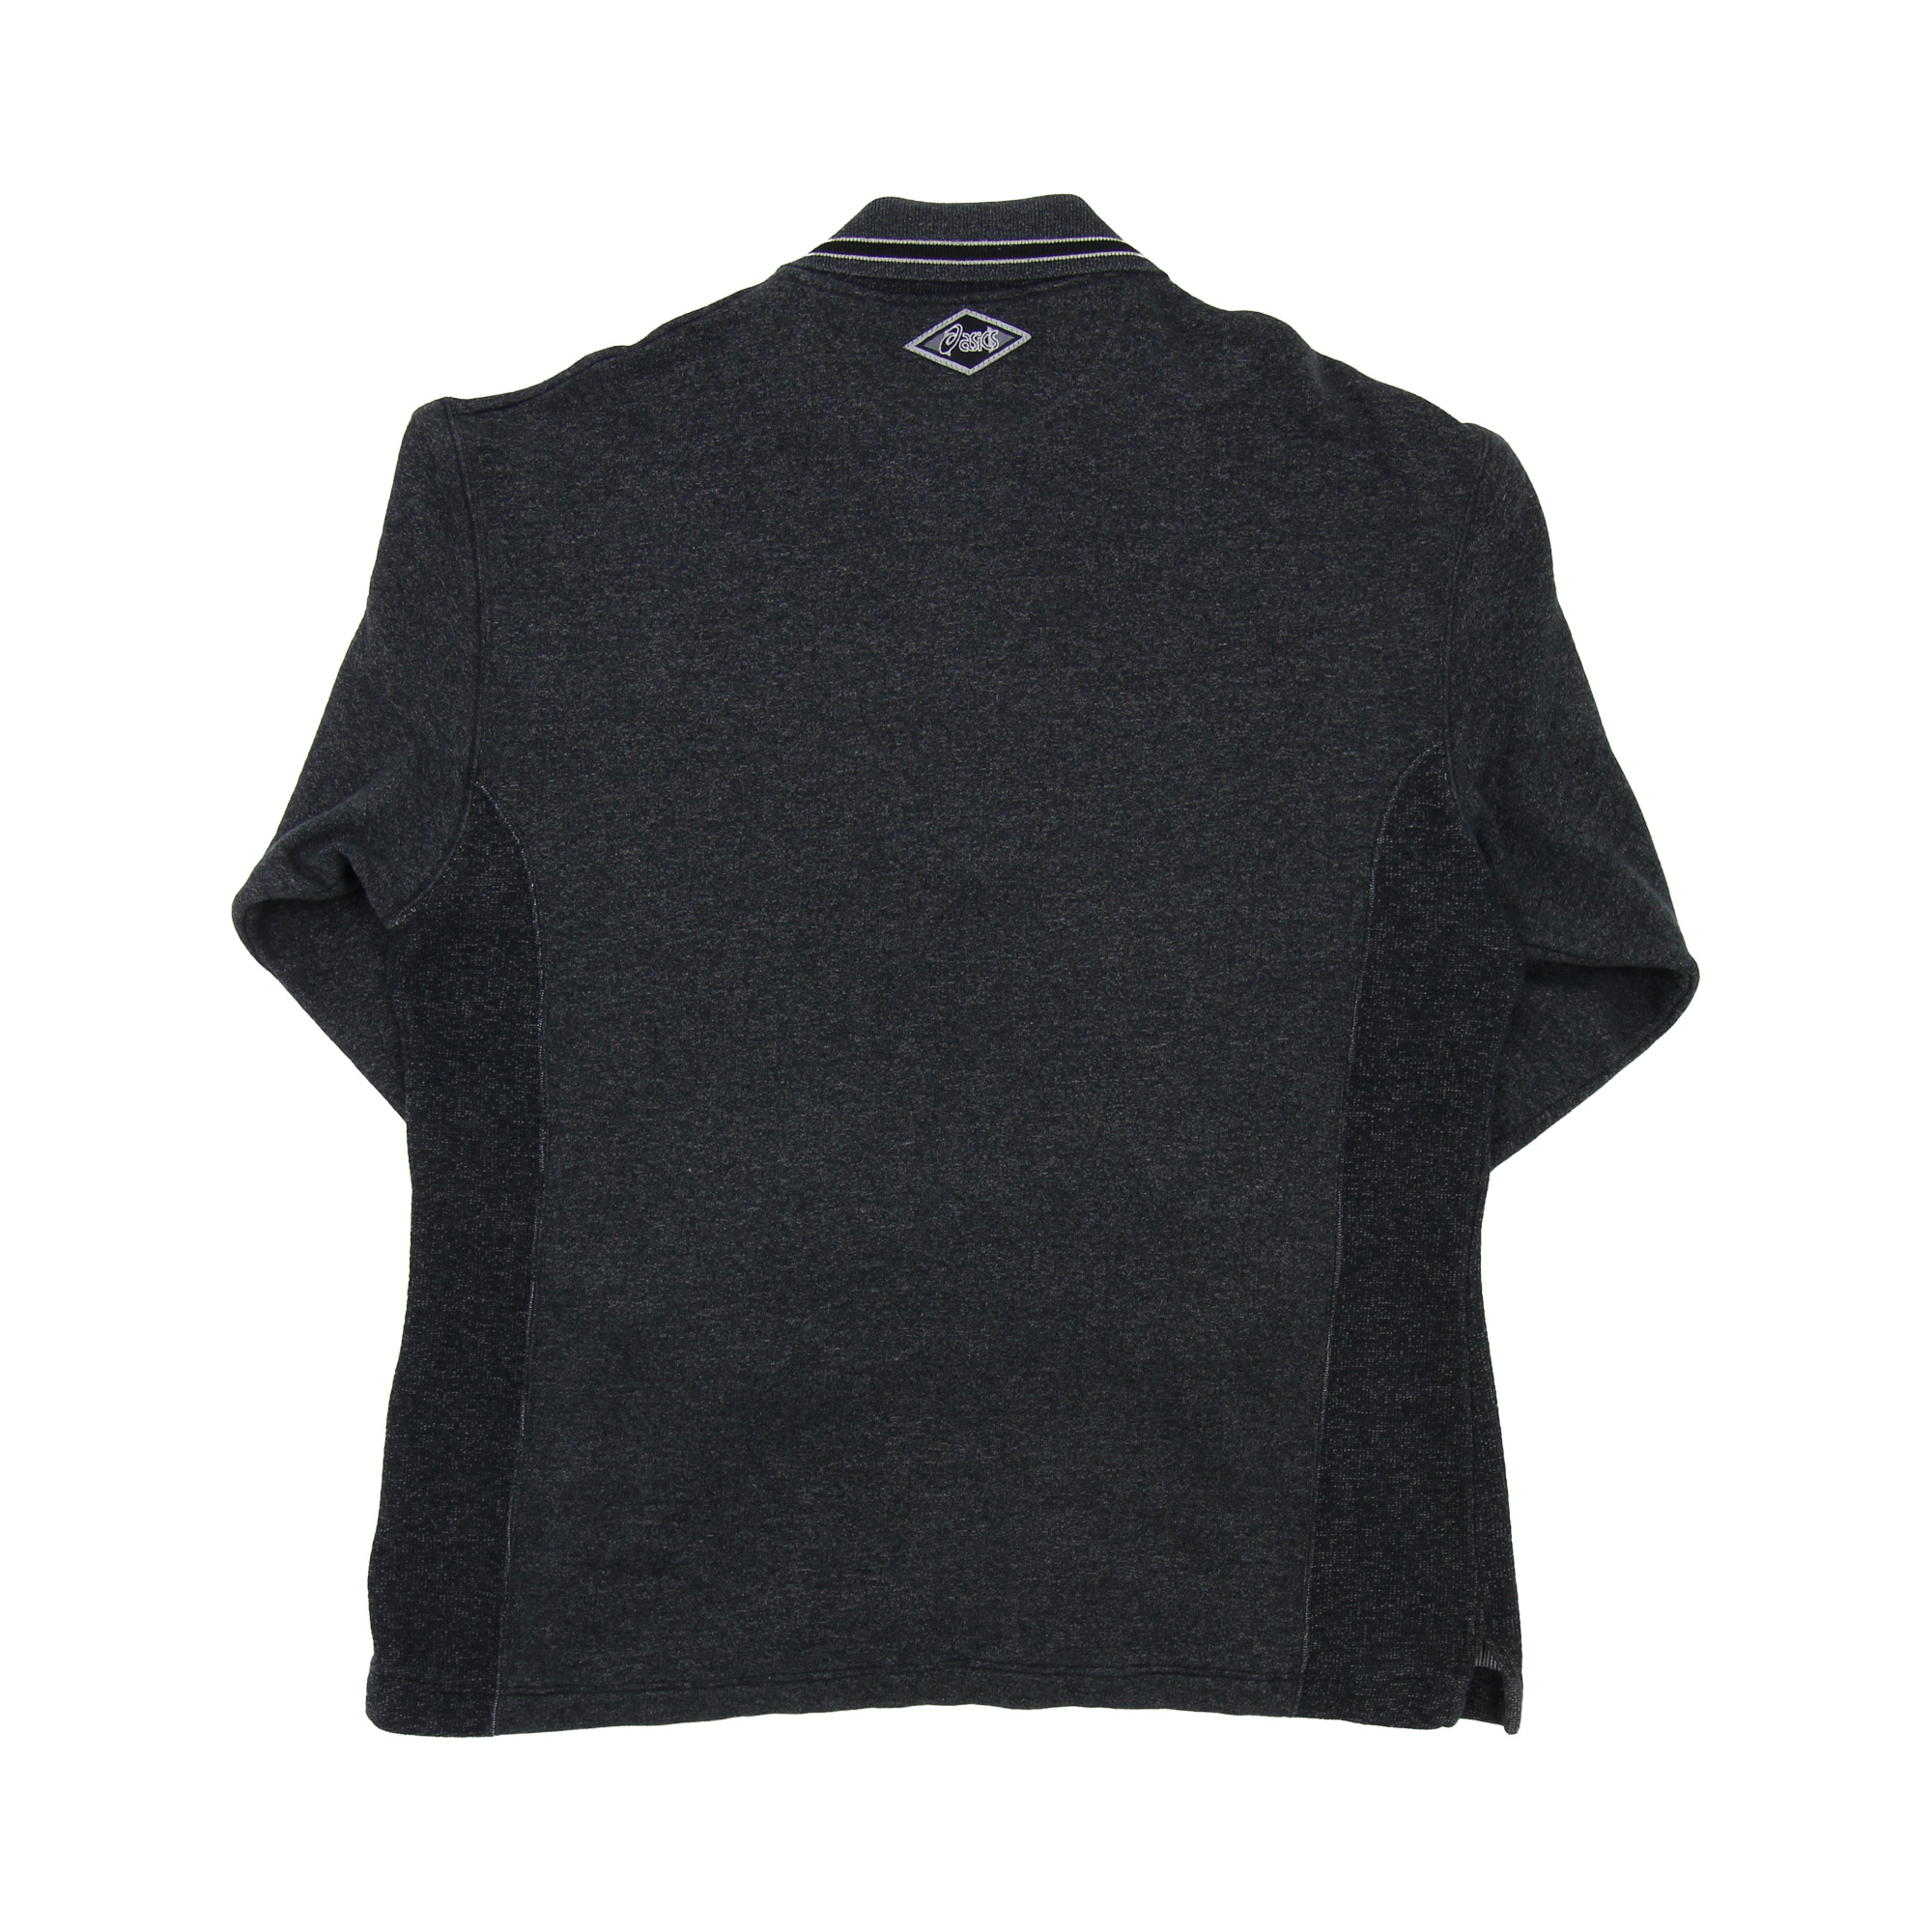 Asics Sweatshirt Grey -  L